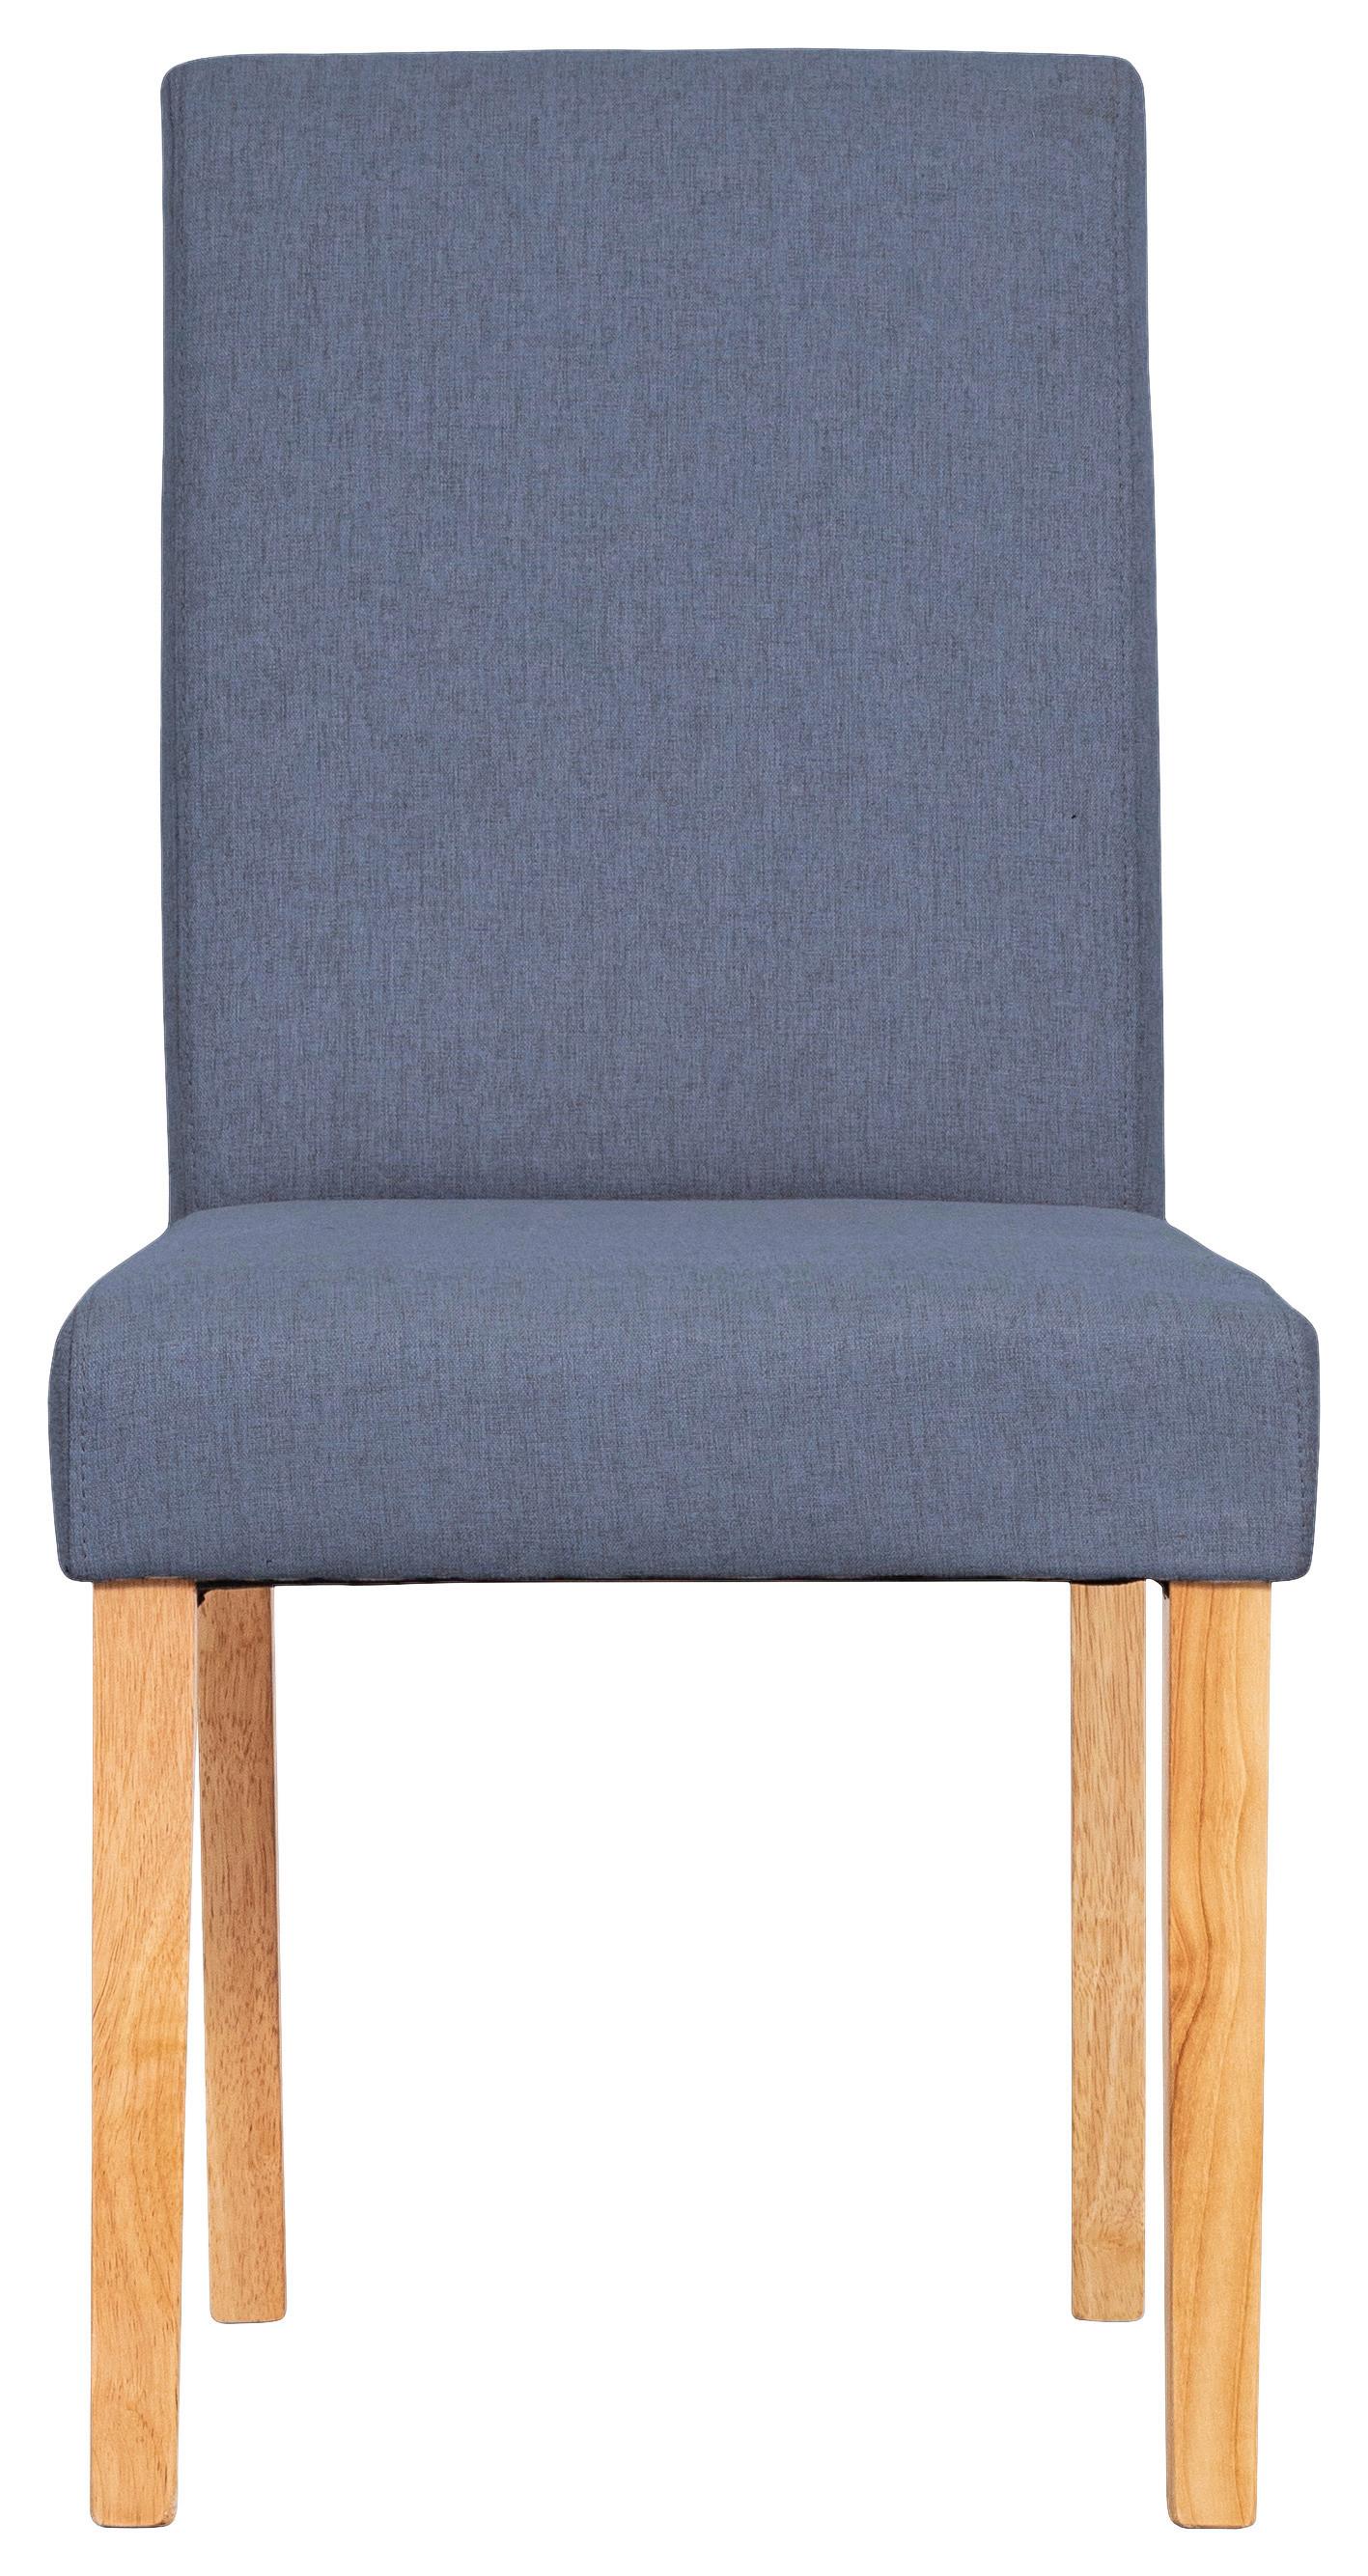 Četveronožna Stolica Tampa - prirodne boje/plava, Konventionell, drvo/tekstil (54/89/45cm) - Based